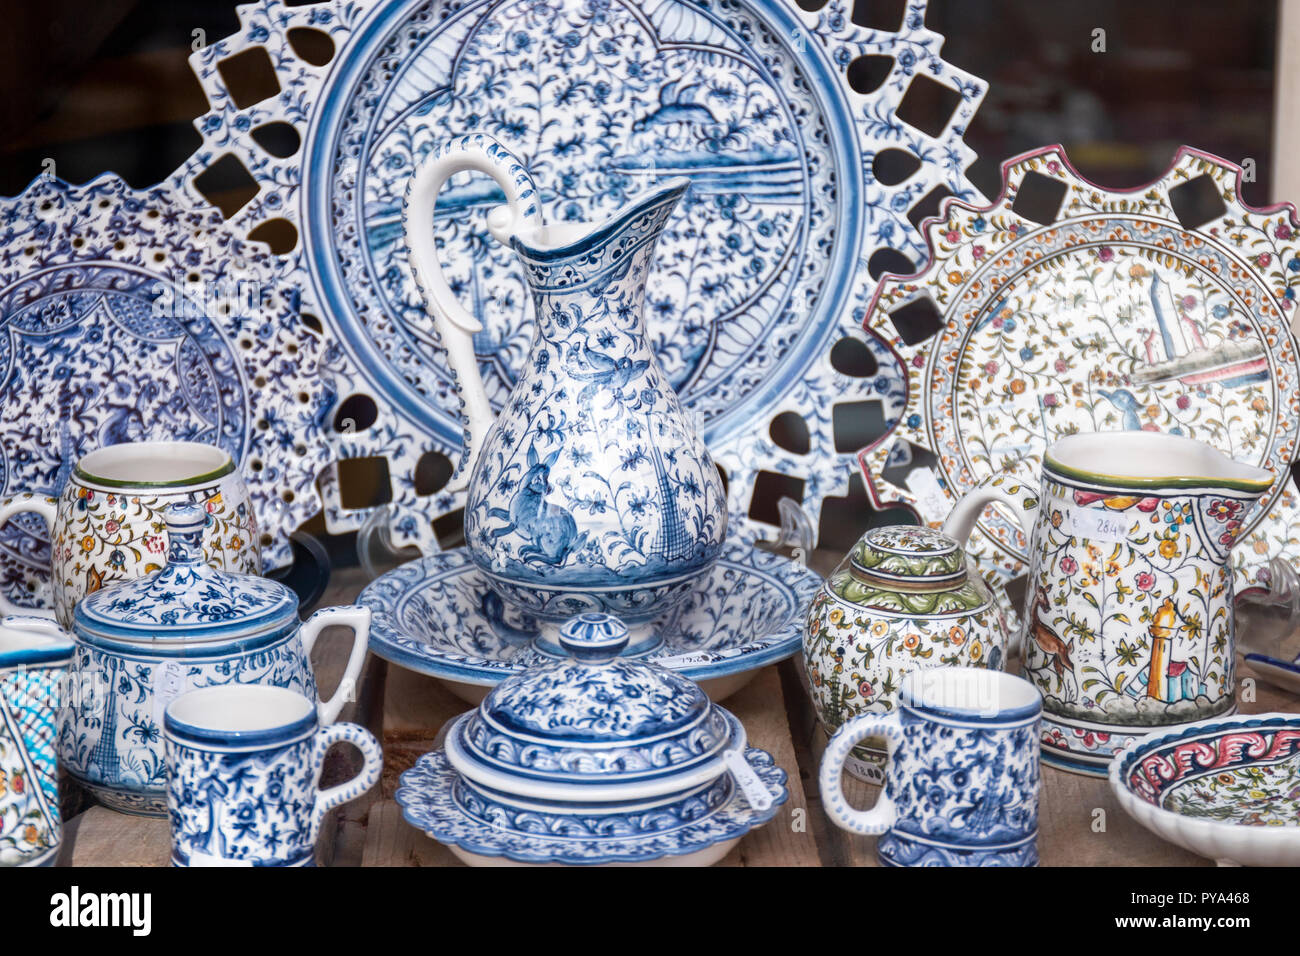 Gruppo di colore blu souvenir portoghese di ceramica vasi di argilla, piatti  e tazze Foto stock - Alamy